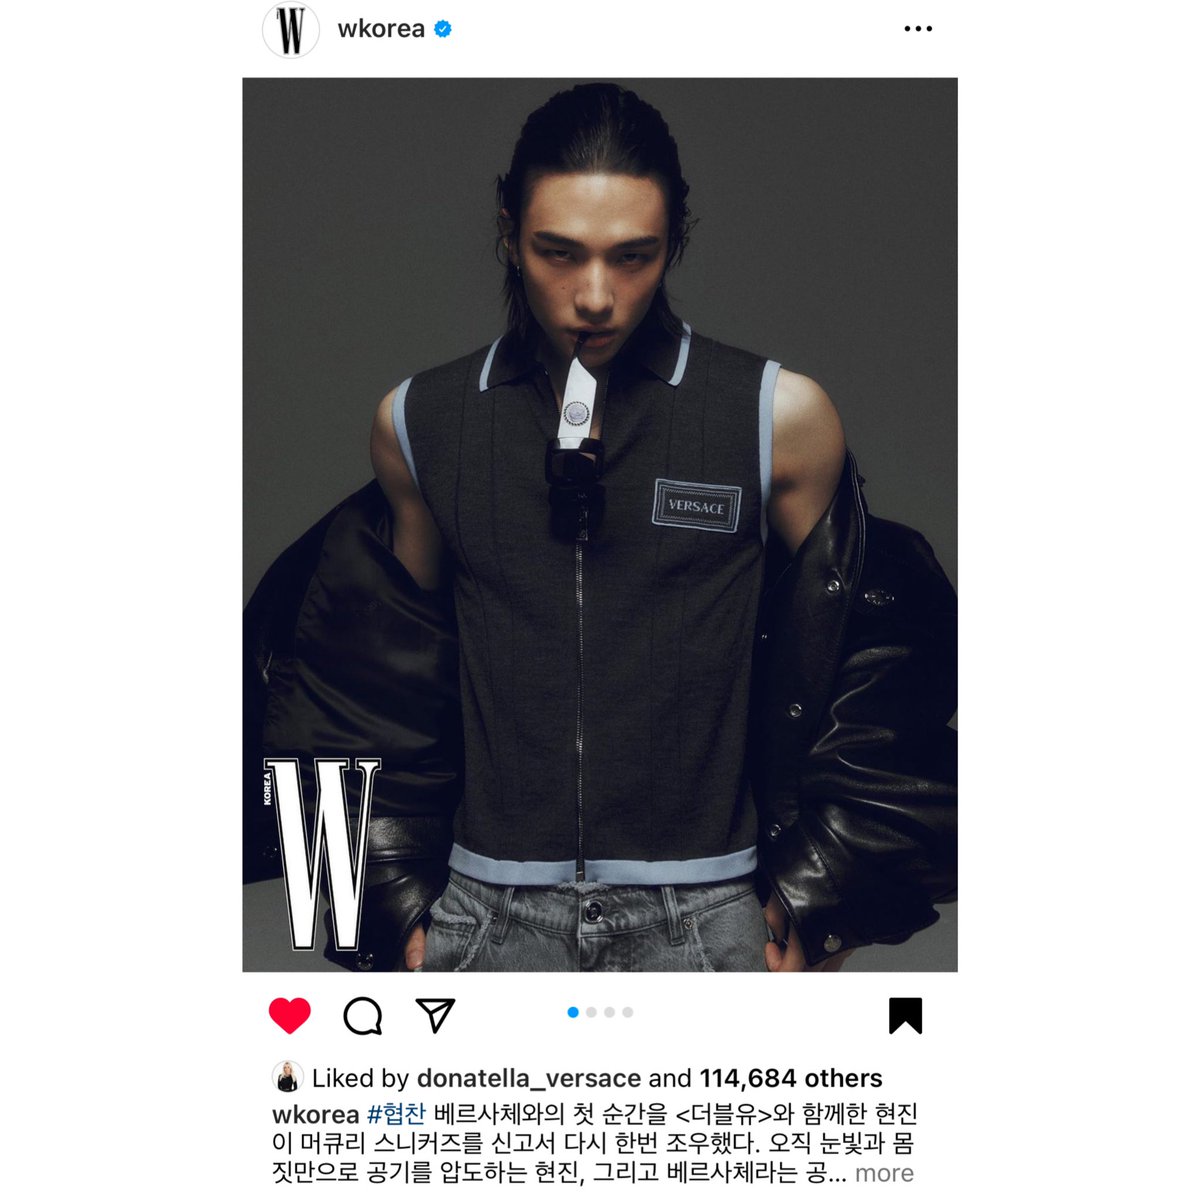 Donatella Versace liked WKorea’s post of #Hyunjin on Instagram! #HYUNJINxVERSACE #HYUNJINxWKOREA